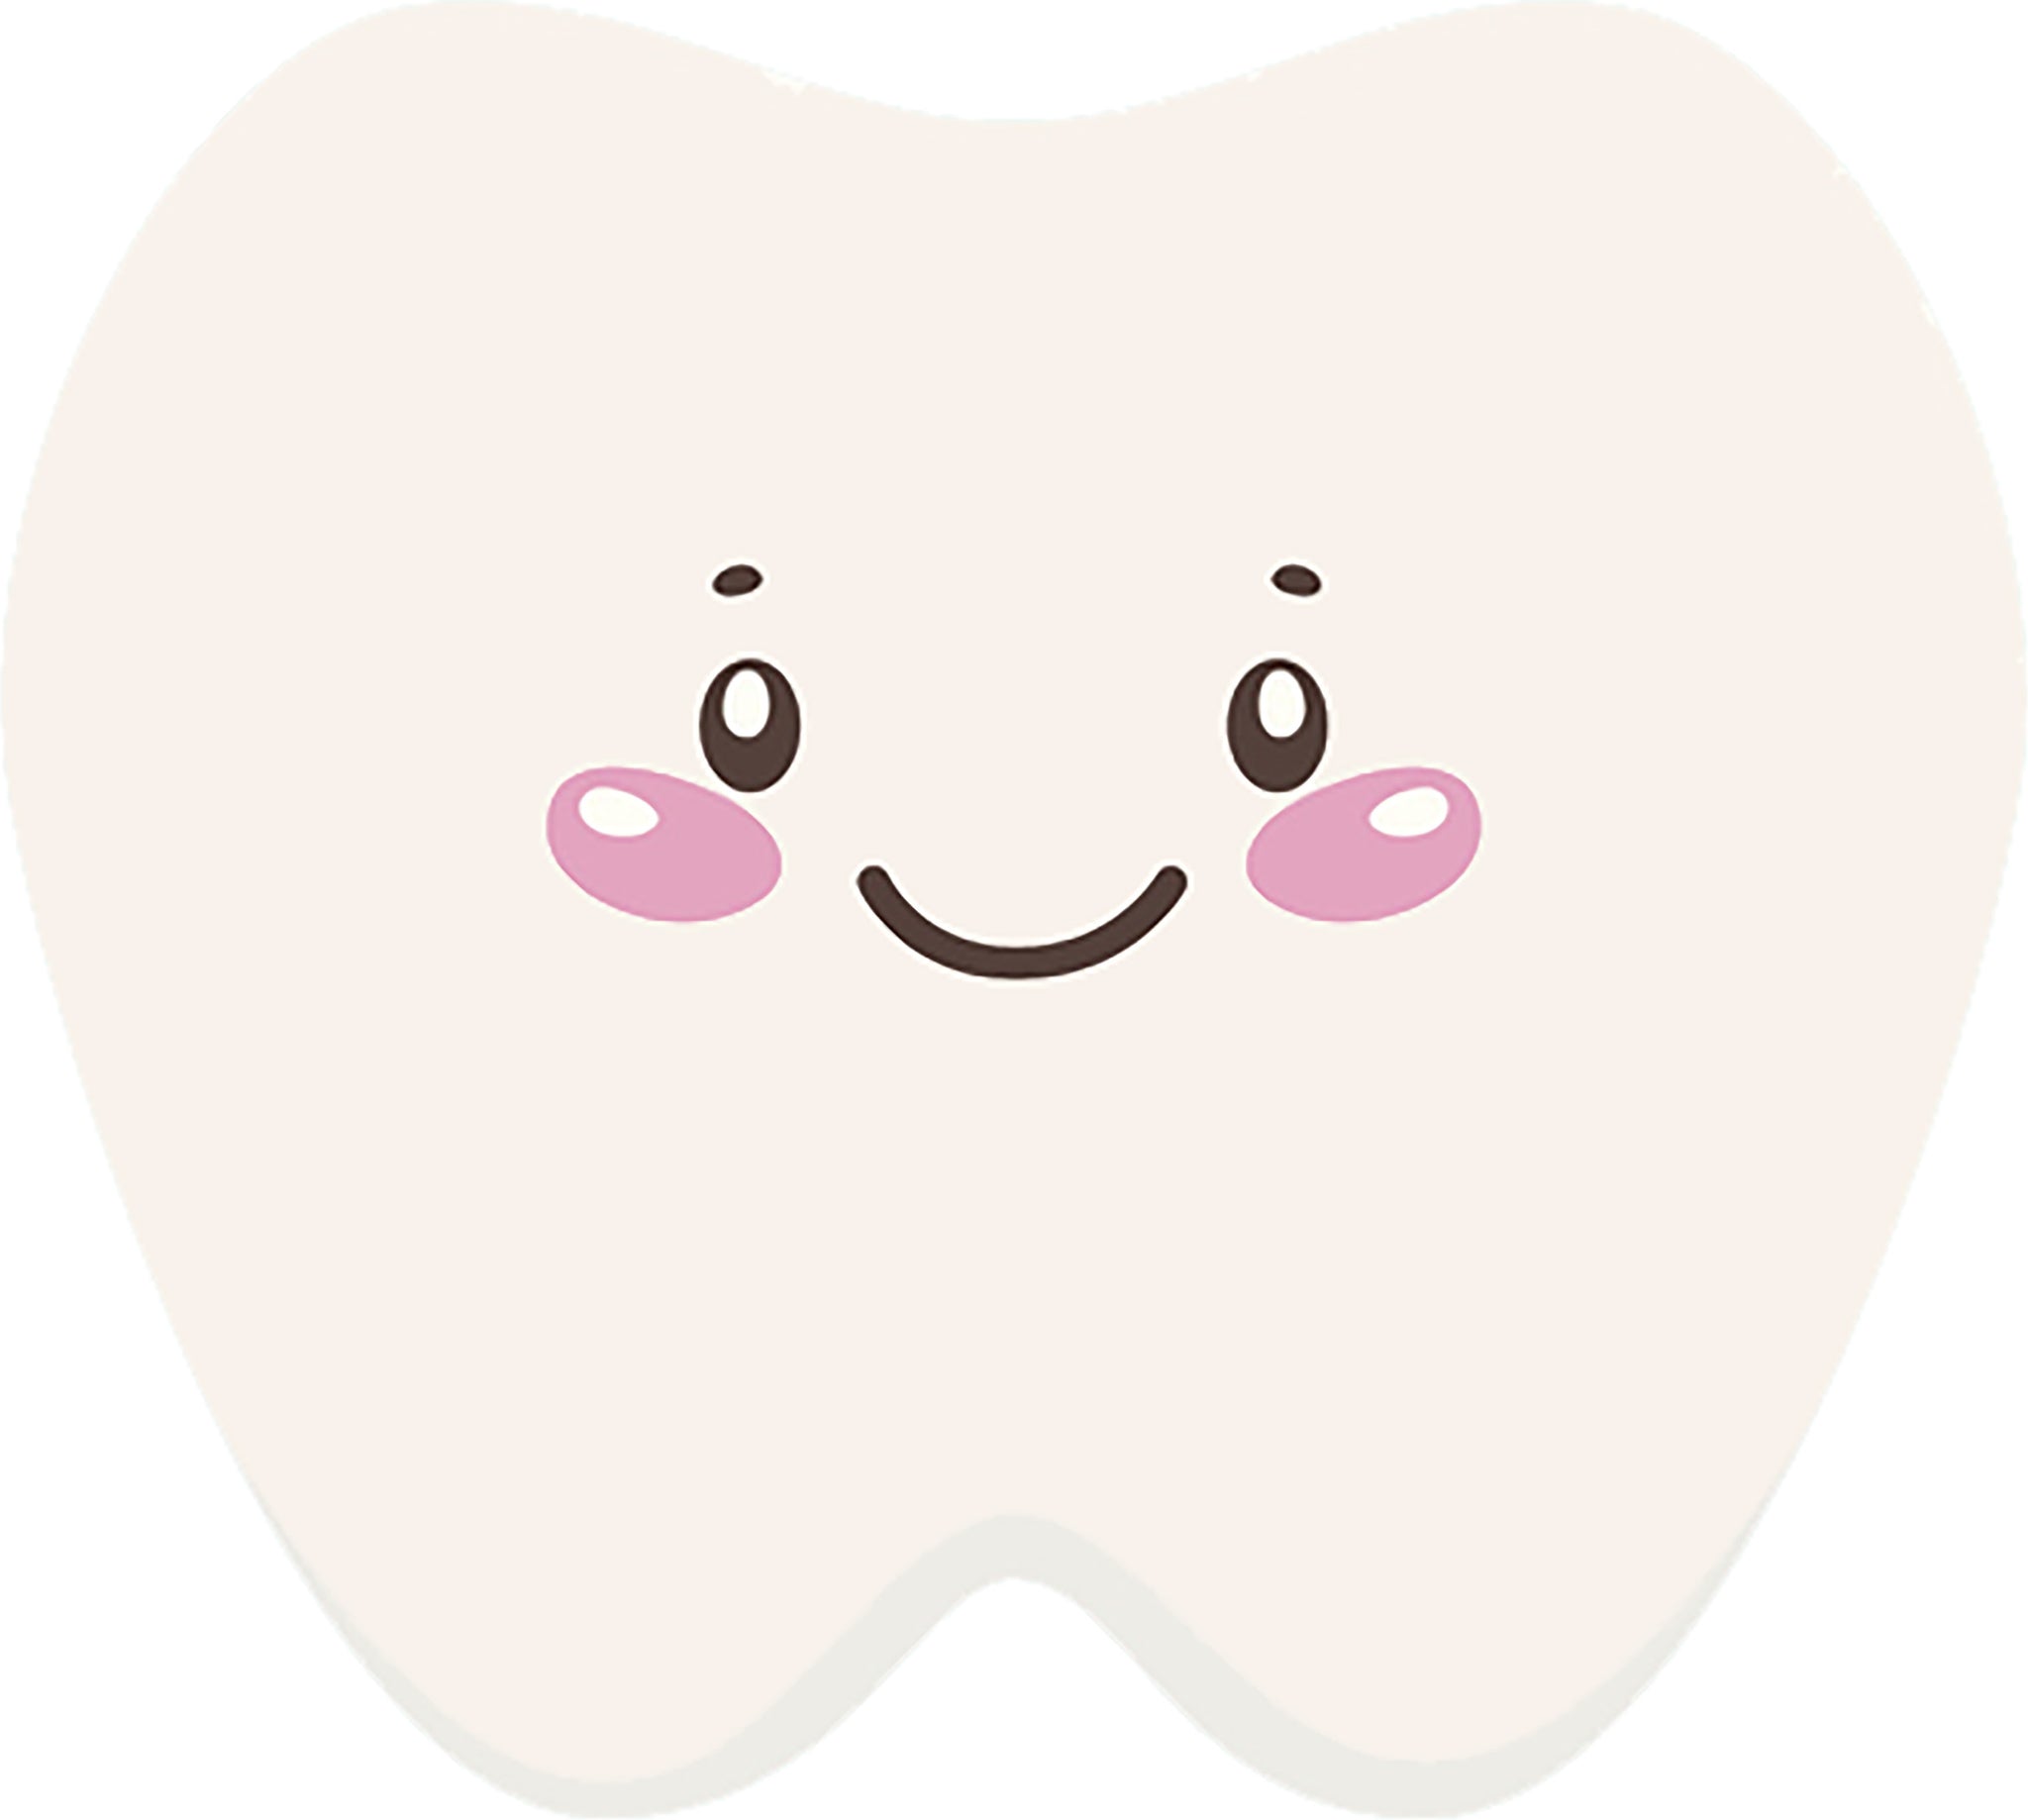 Cute Silly Kawaii Tooth Teeth Cartoon Emoji #1 Vinyl Decal Sticker